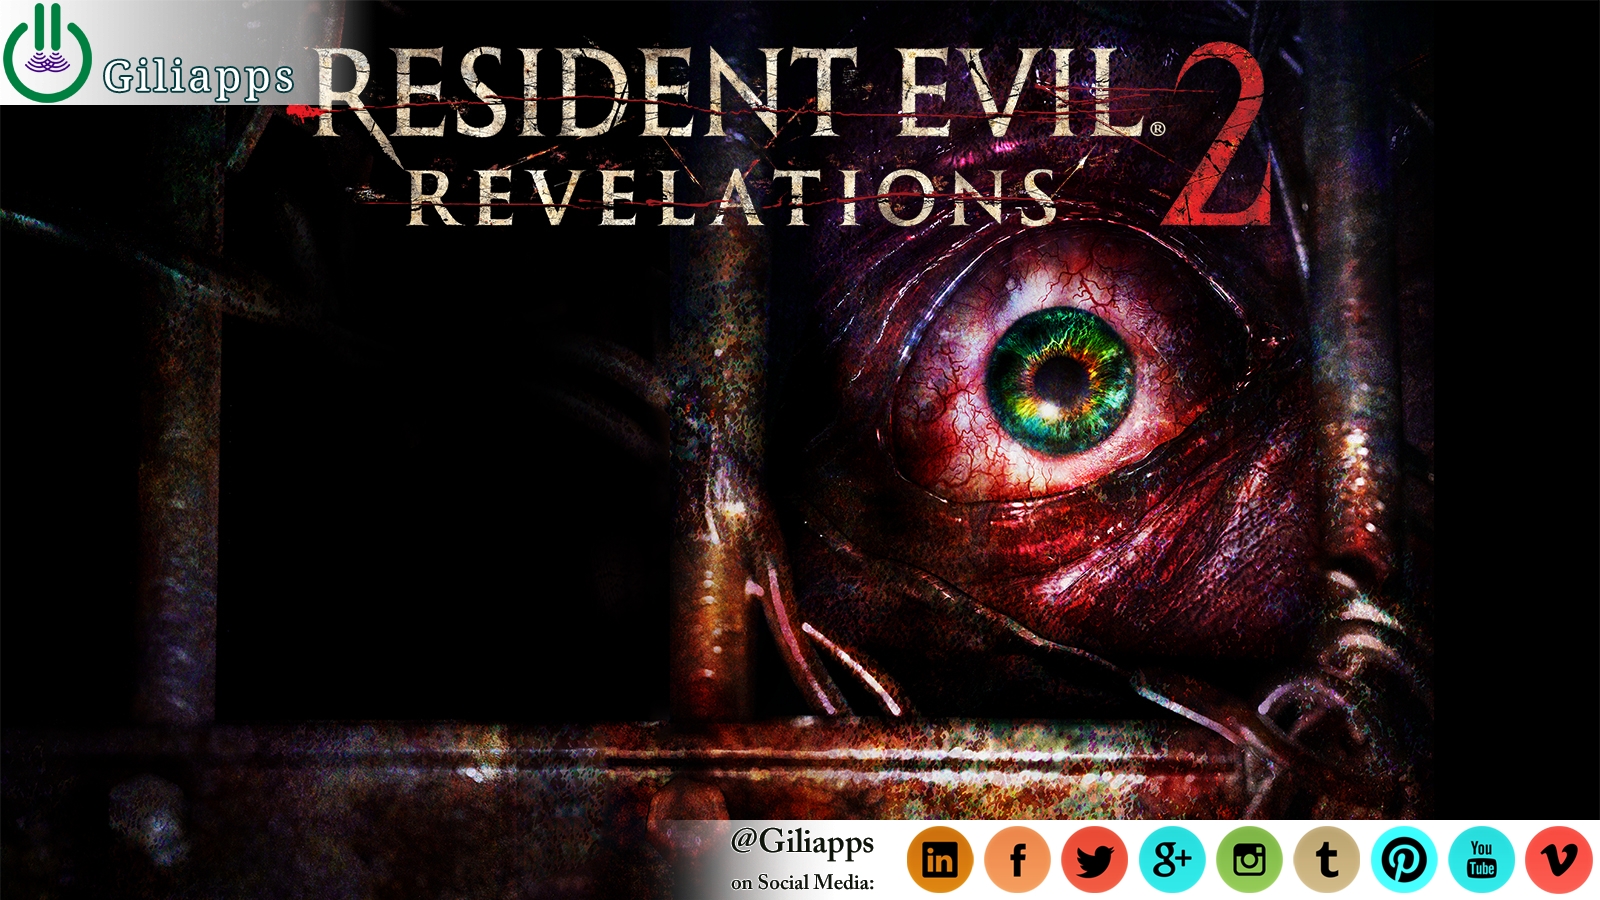 Nintendo Switch version of Resident Evil: Revelations 2 will release on 28 Nov 2017